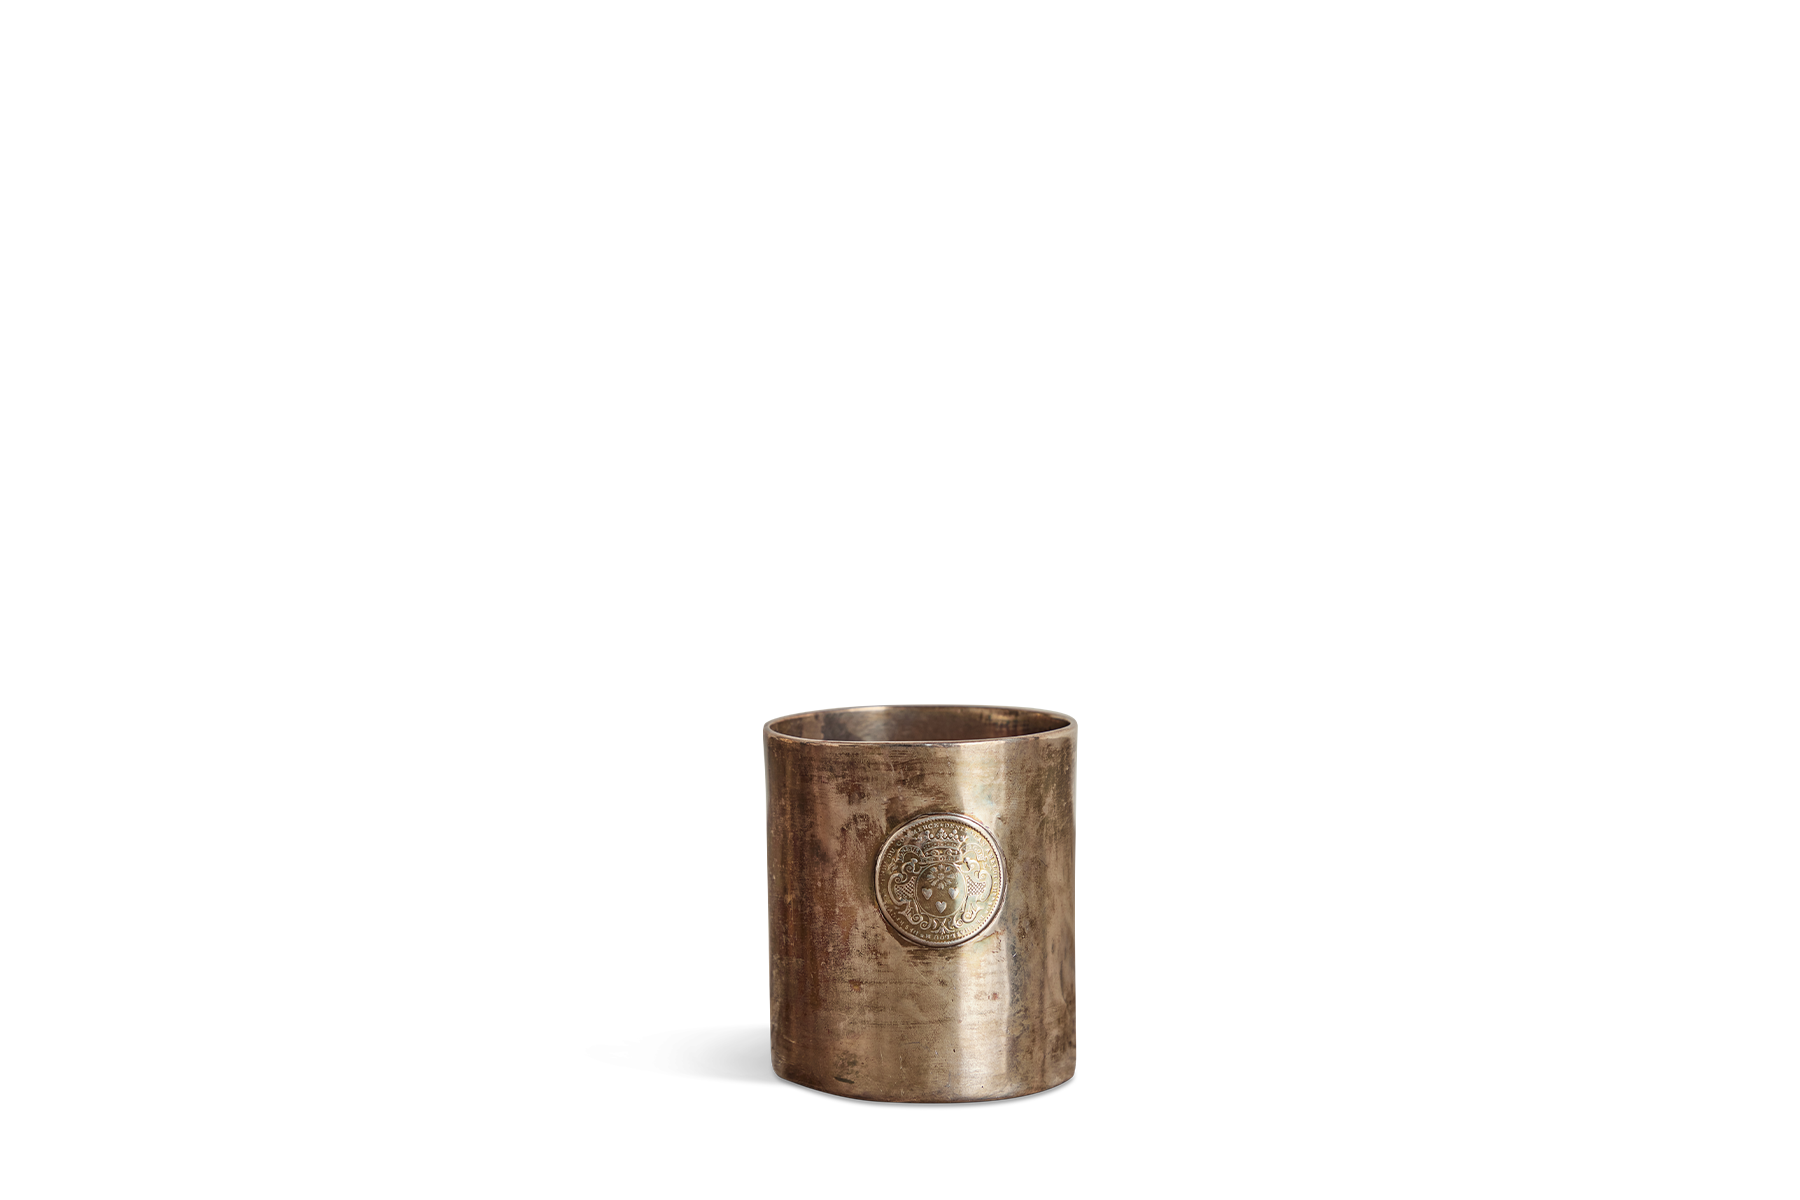 Silver Cup by Doyen